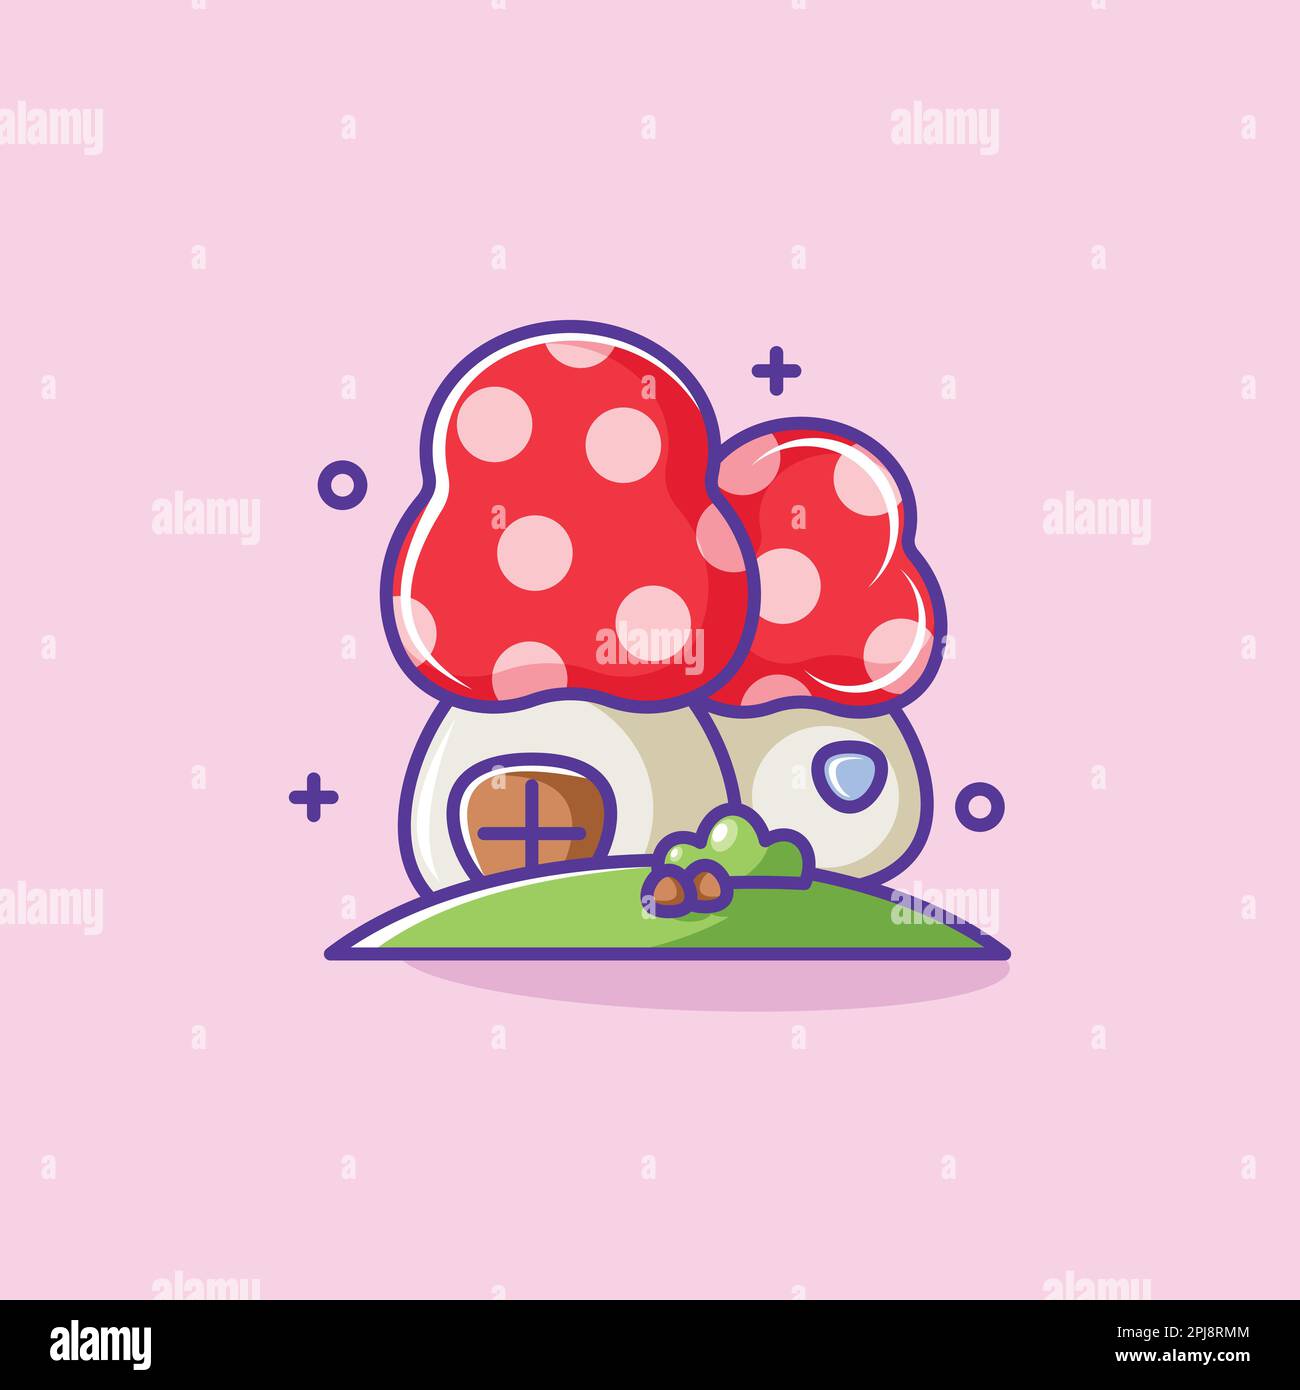 Two cute cartoon mushroom house designs Stock Vector